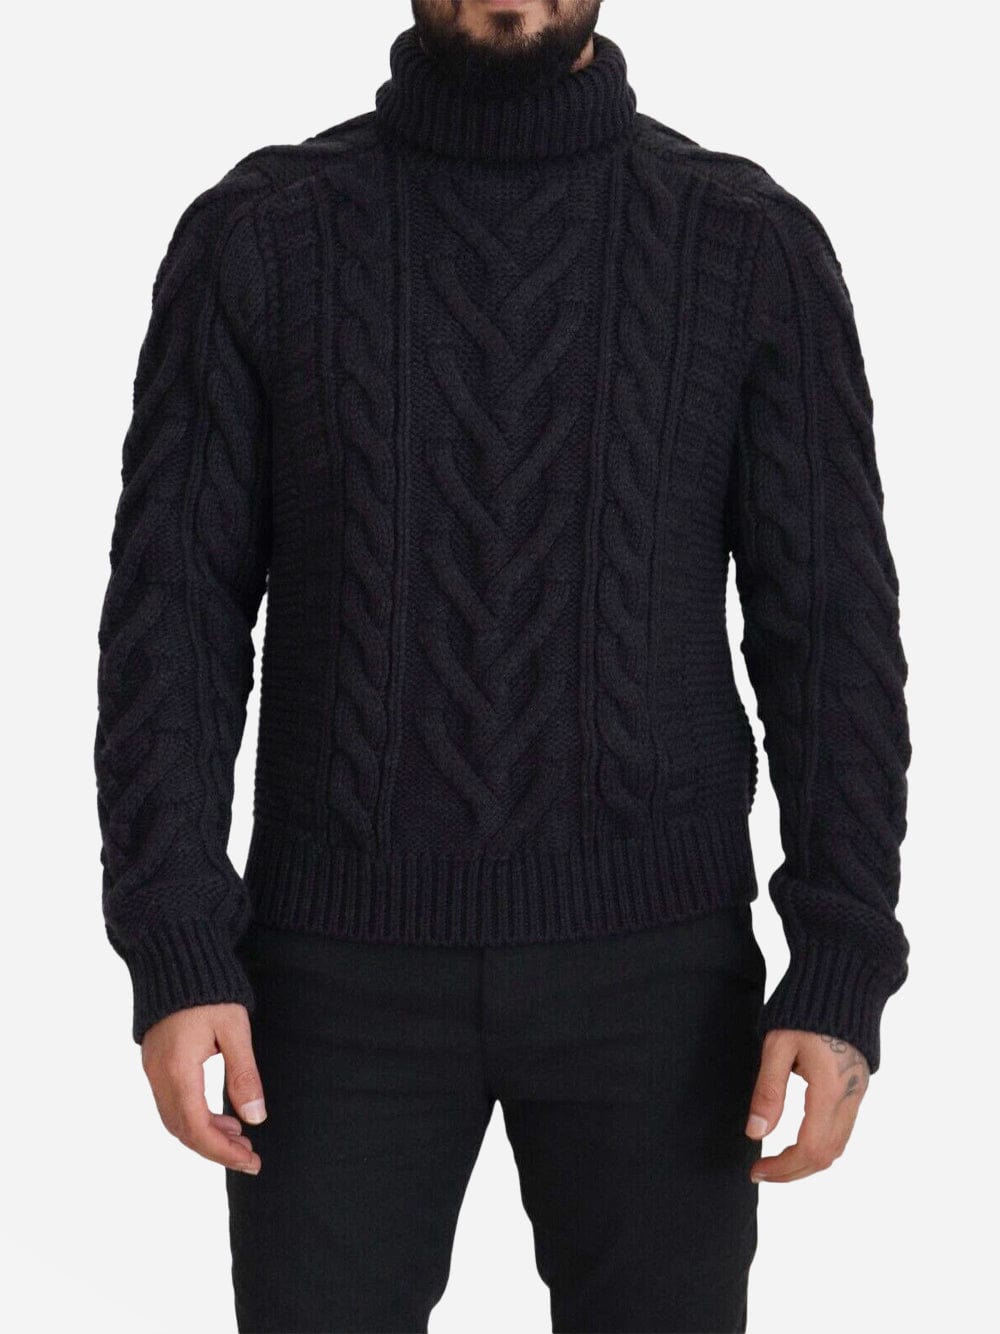 Dolce & Gabbana Knitted Turtleneck Sweater